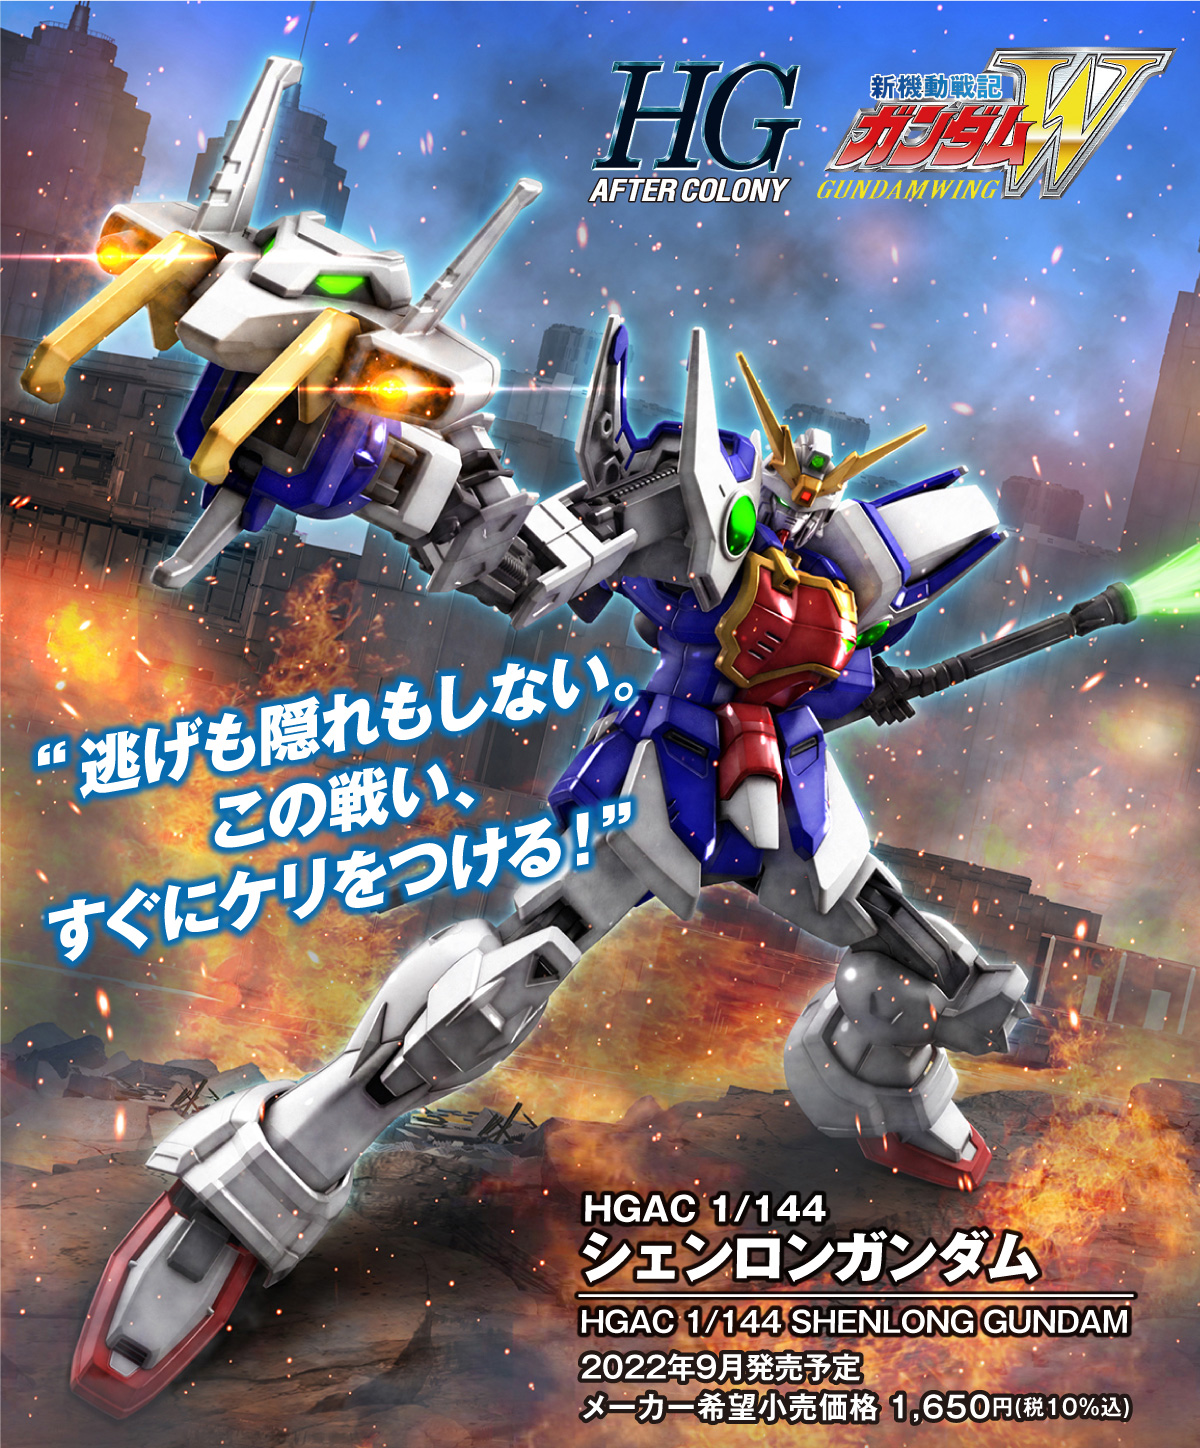 “I won't run away or hide. I'll get a button right away in this battle!” HGAC 1/144 Shenlong Gundam